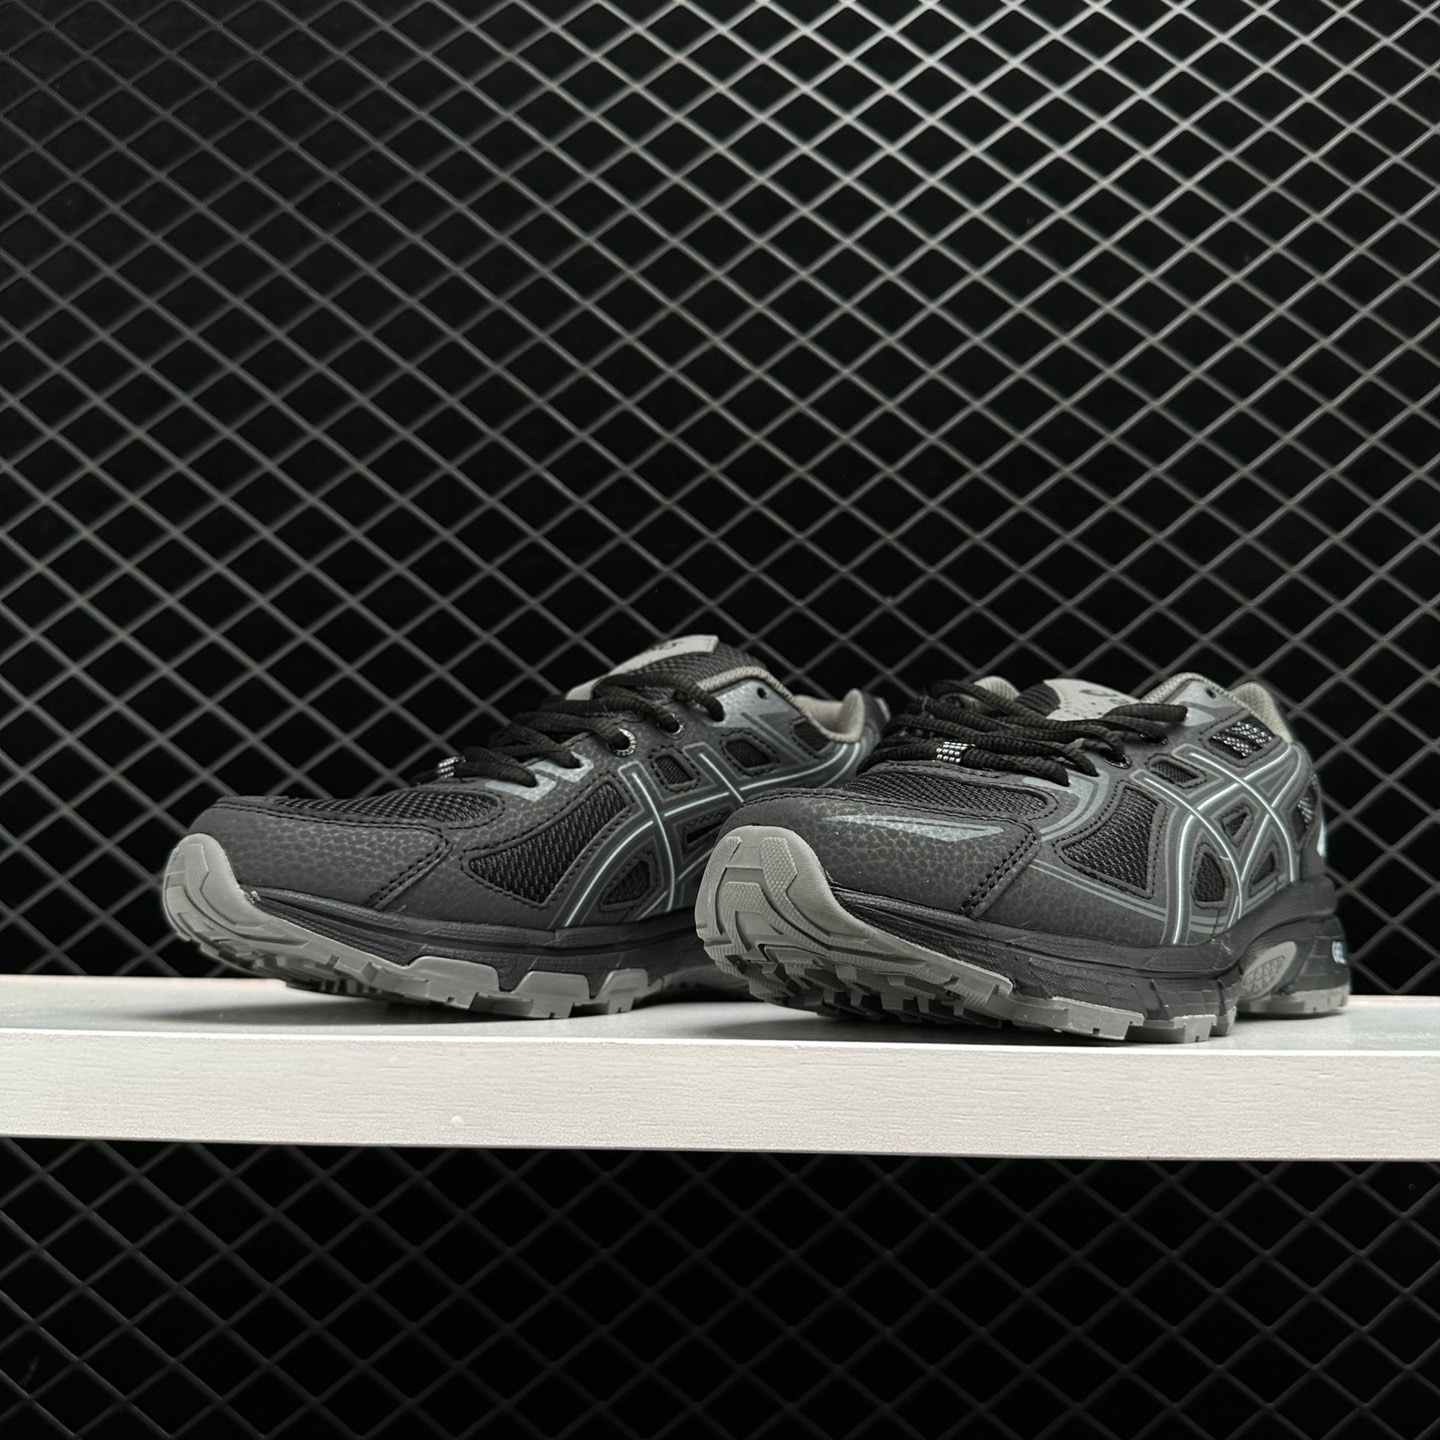 Asics Gel Venture 6 4E Wide Black Phantom T7G3N-9016 - Stylish and Comfortable Athletic Shoes